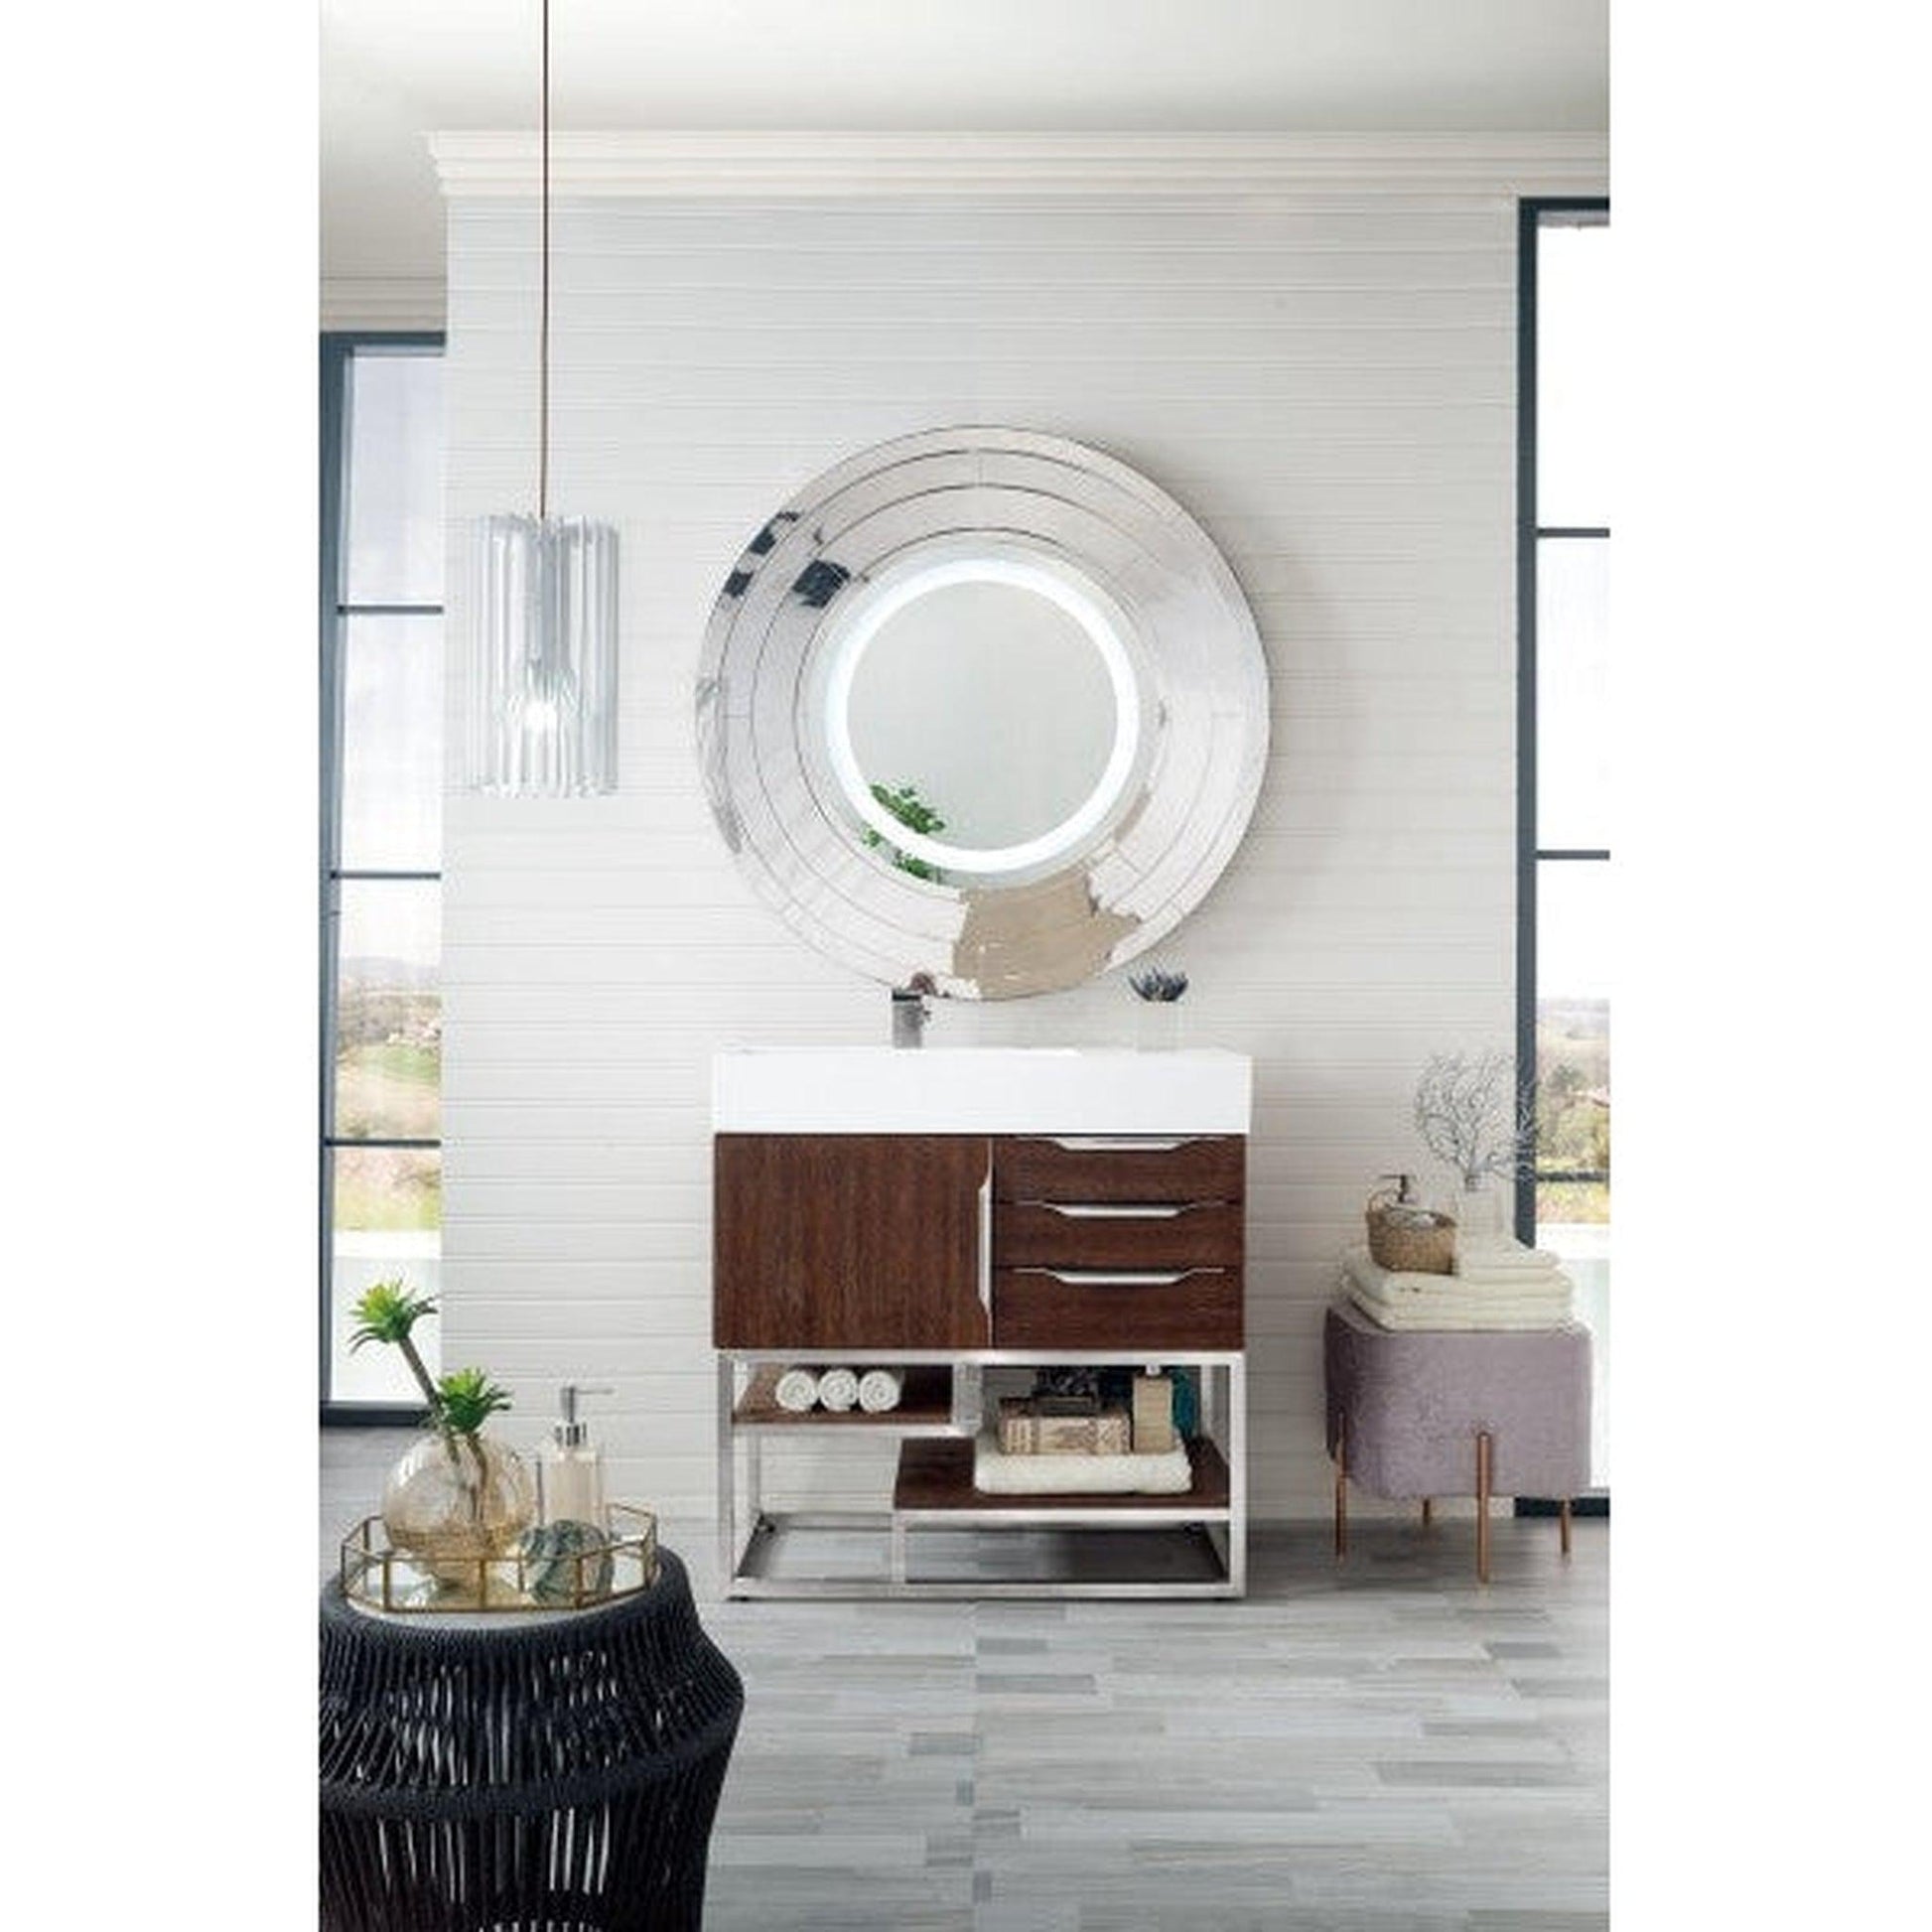 James Martin Columbia 36" Single Coffee Oak Bathroom Vanity With 6" Glossy White Composite Countertop